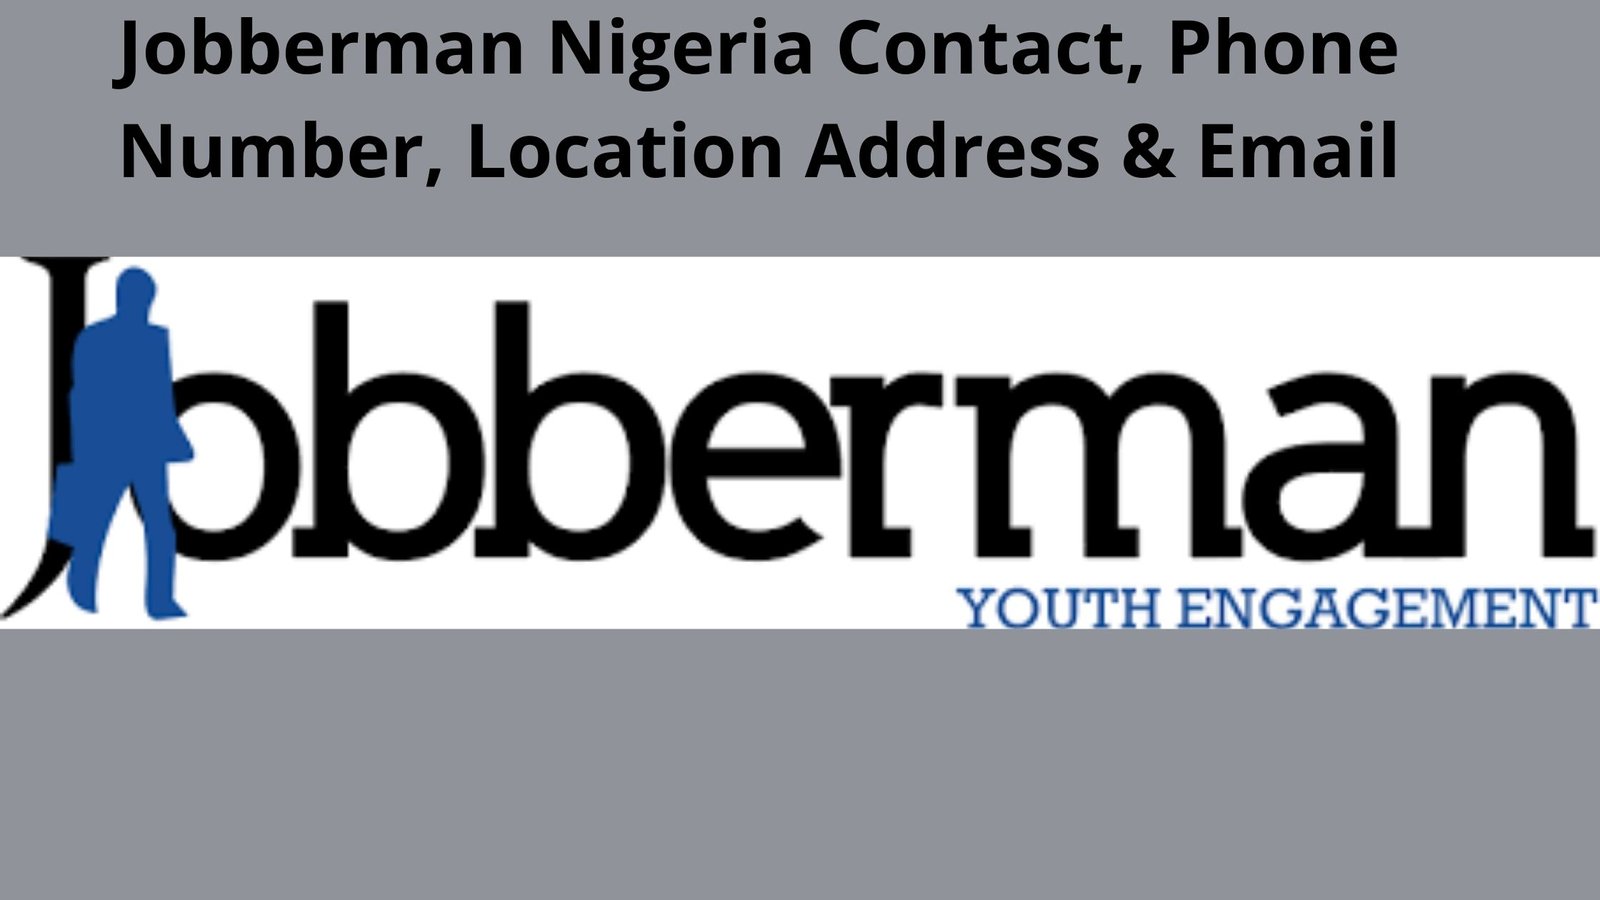 Jobberman Nigeria Contact